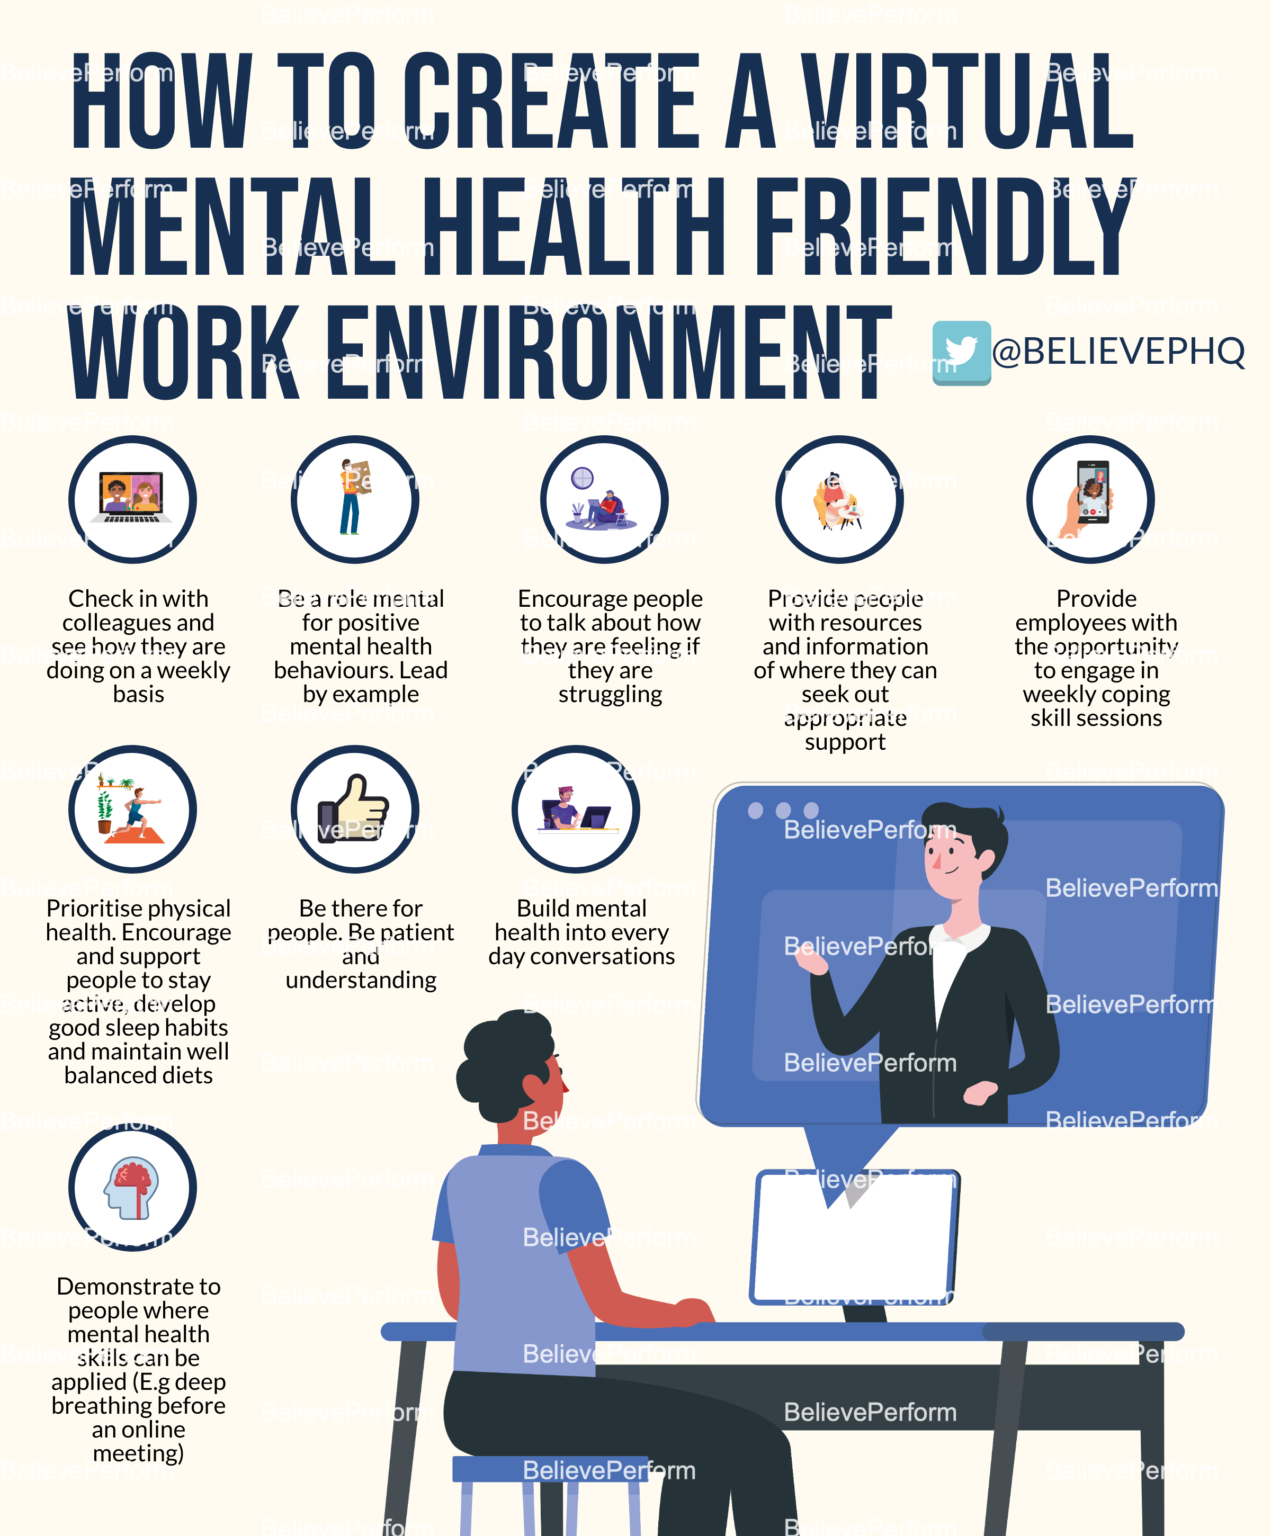 How to create a virtual mental health friendly work environment